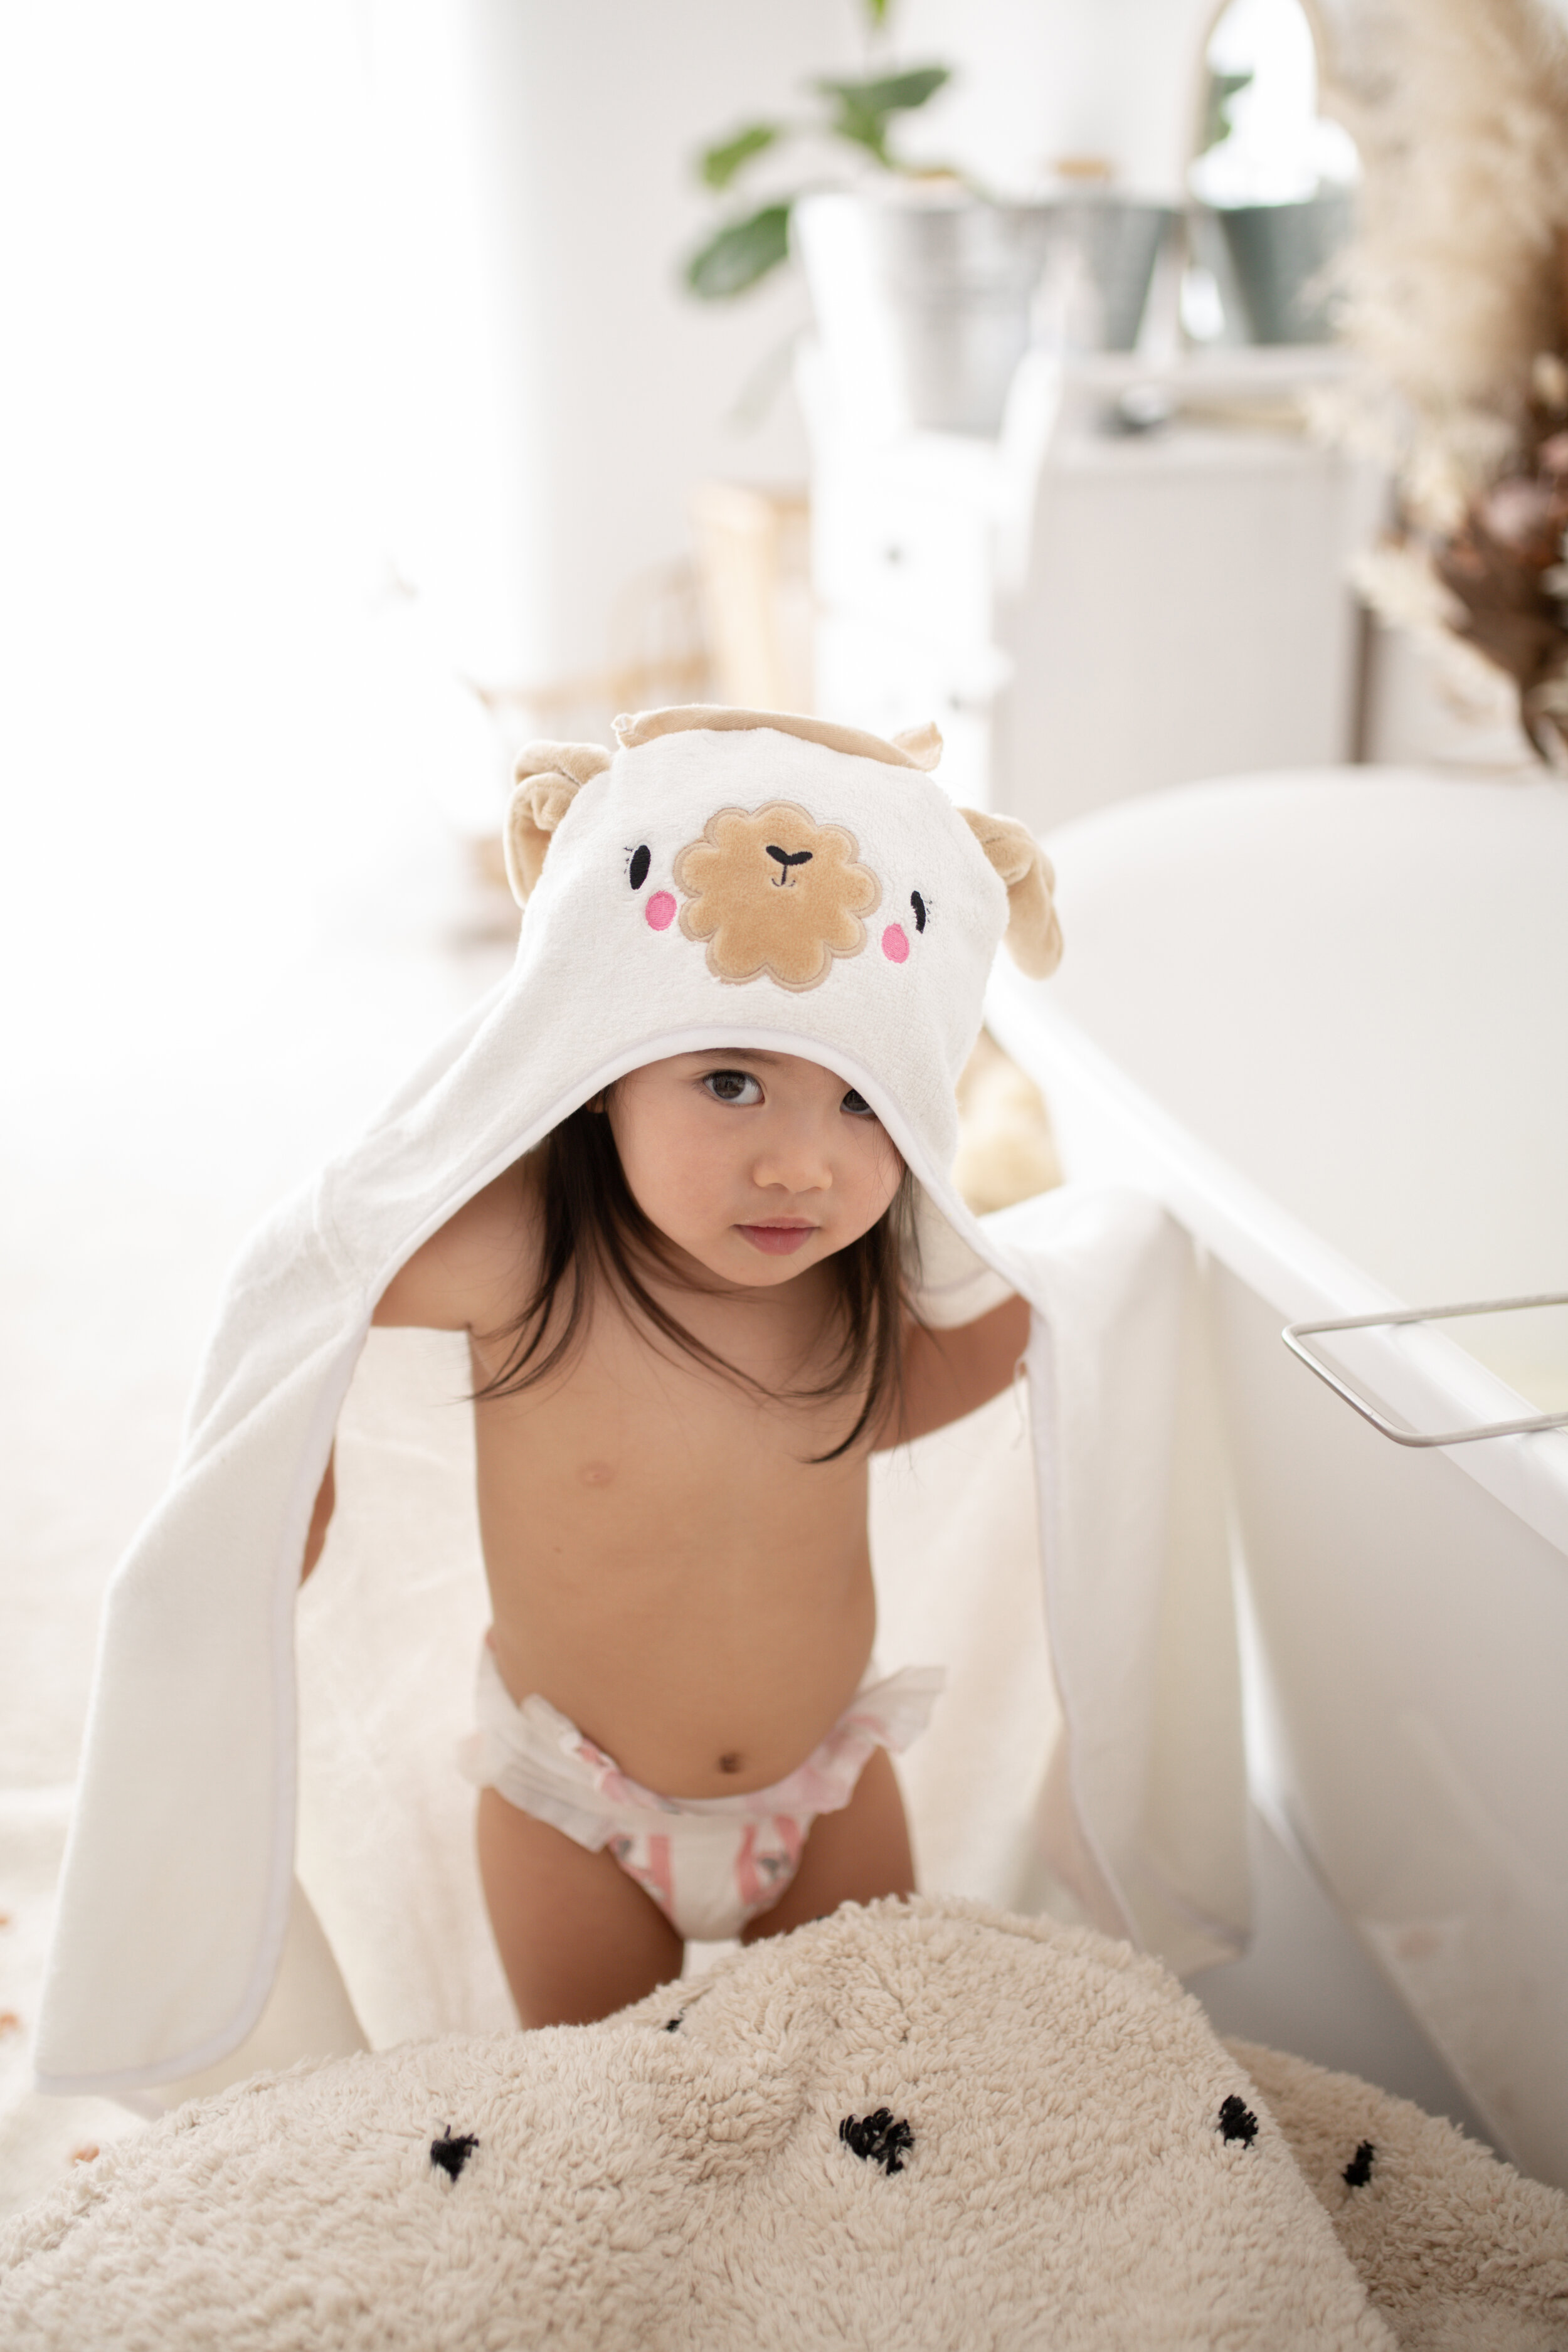 Australian baby towel product photography